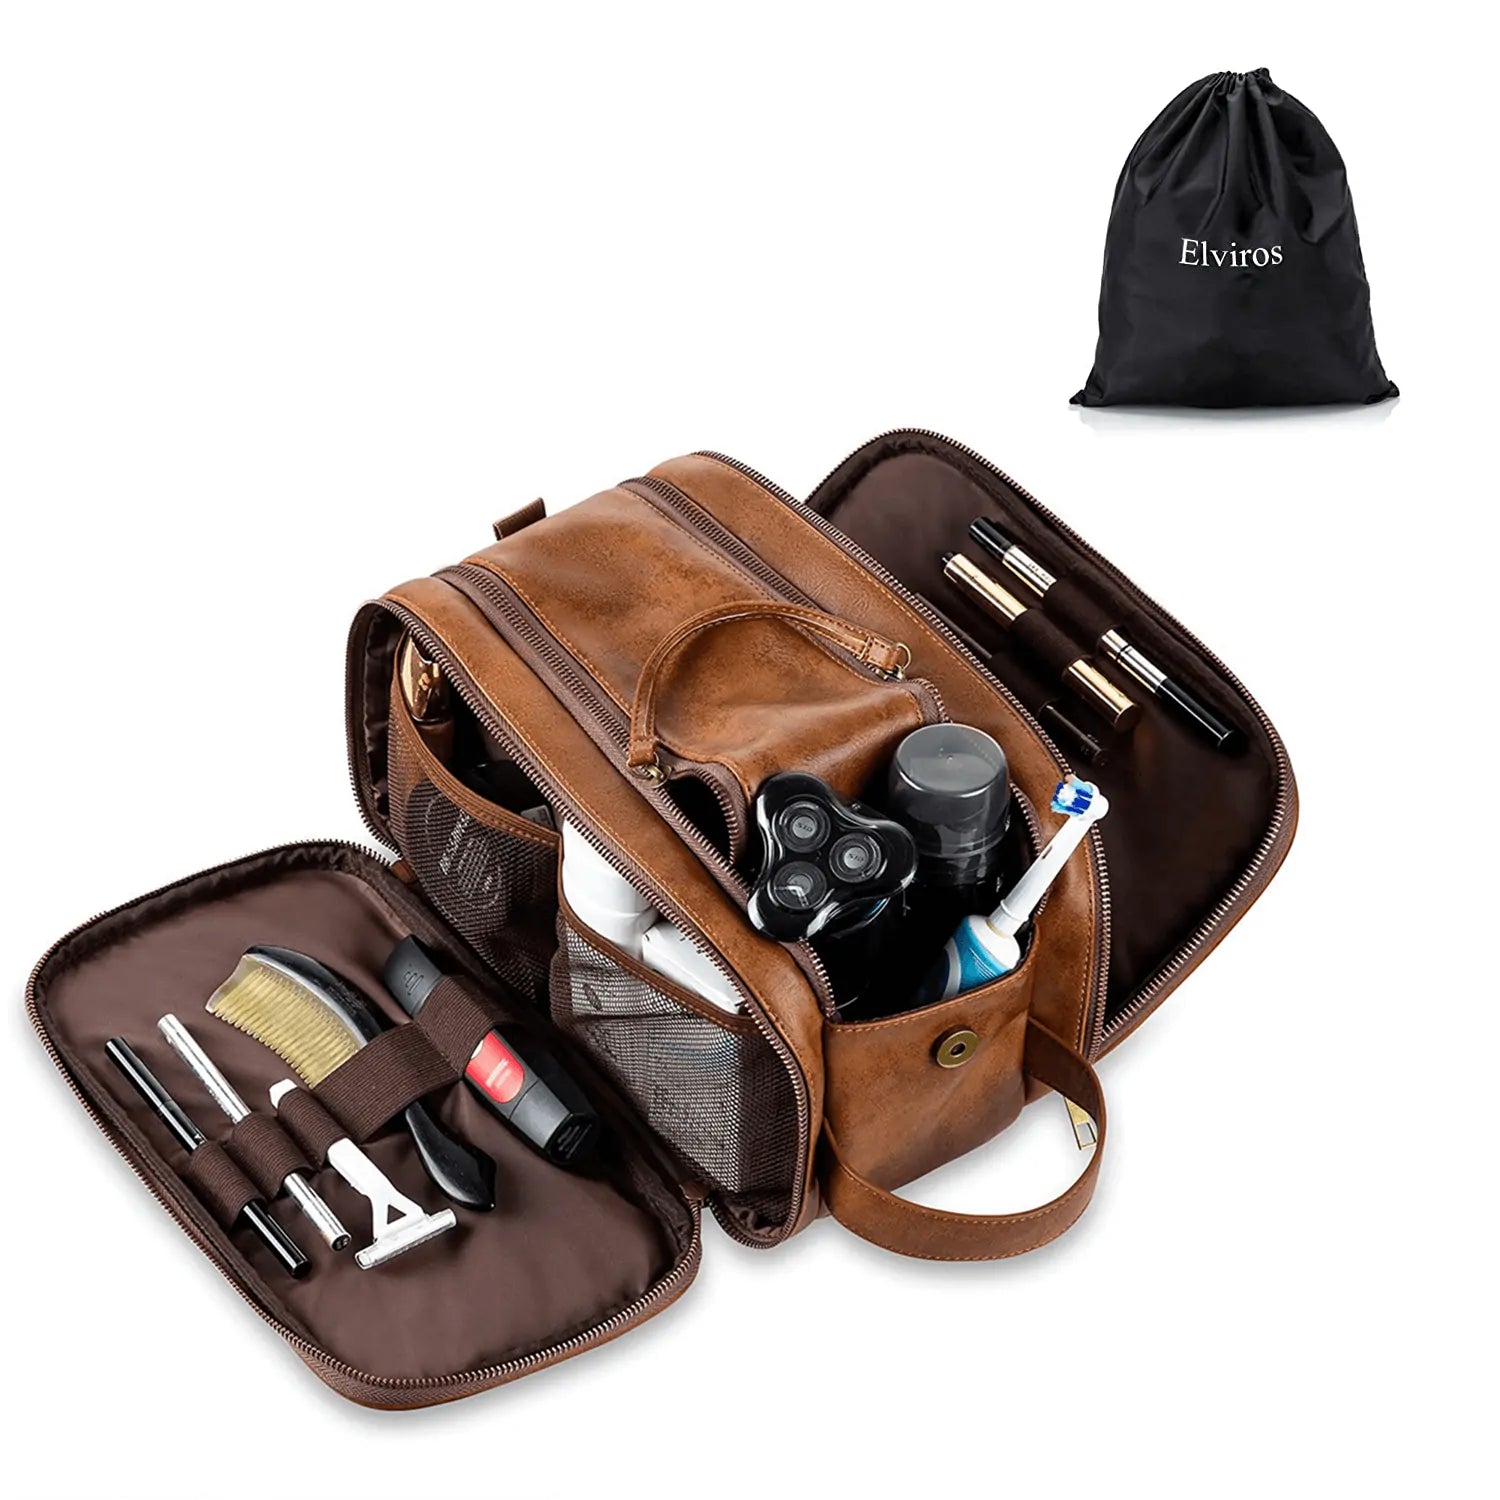 Elviros Toiletry Bag, Travel Dopp Kit Leather Makeup Organizer Brown / Small (9.4 x 5.9 x 6.3inch)